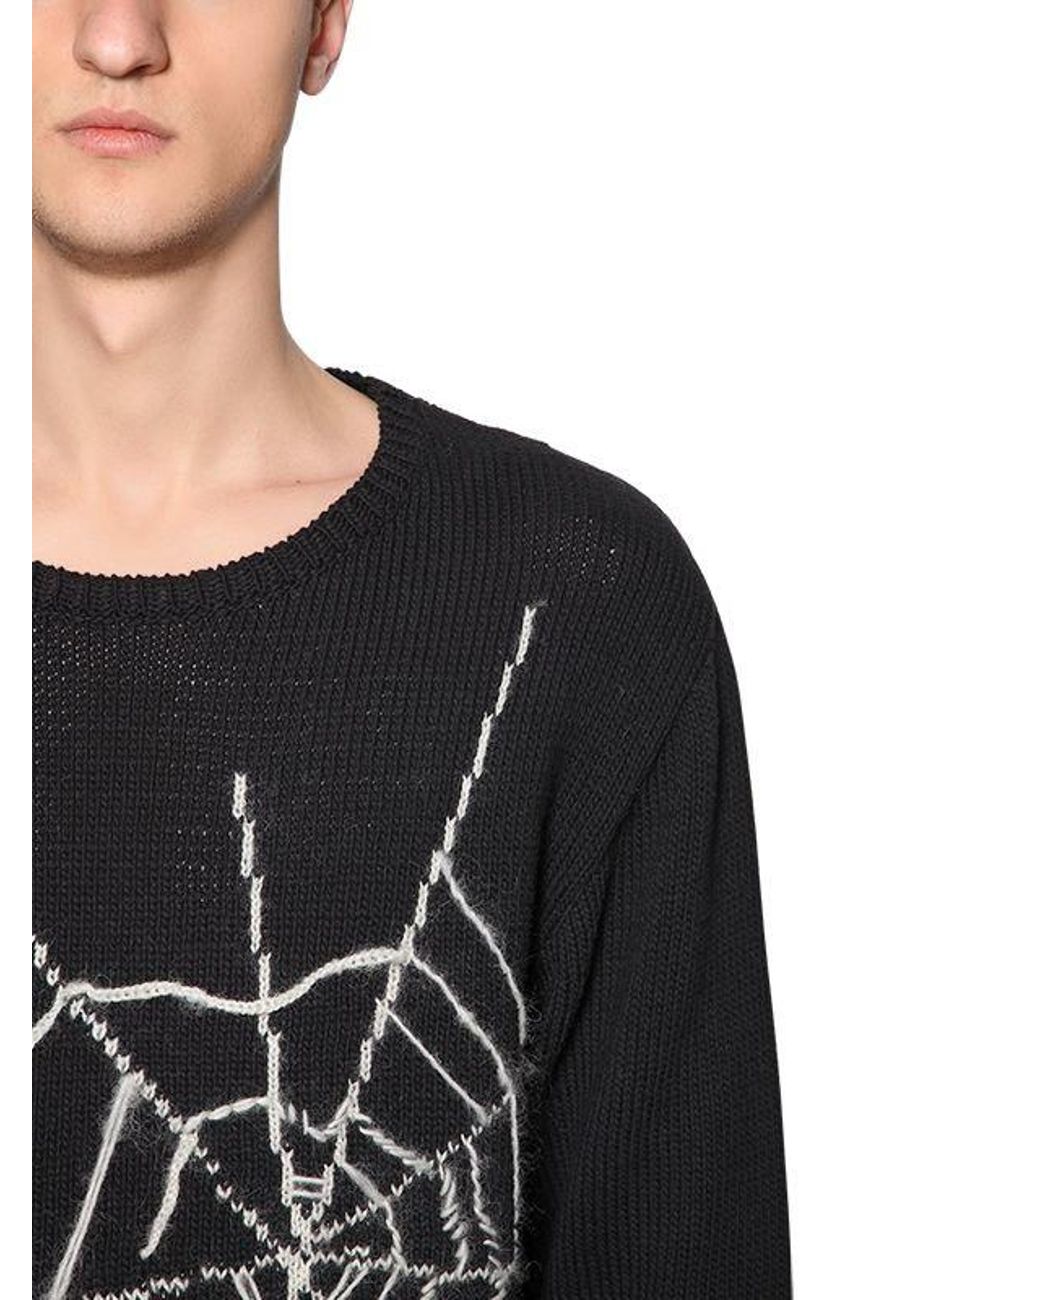 Yohji Yamamoto Spider Web Cotton Knit Sweater in Black for Men | Lyst